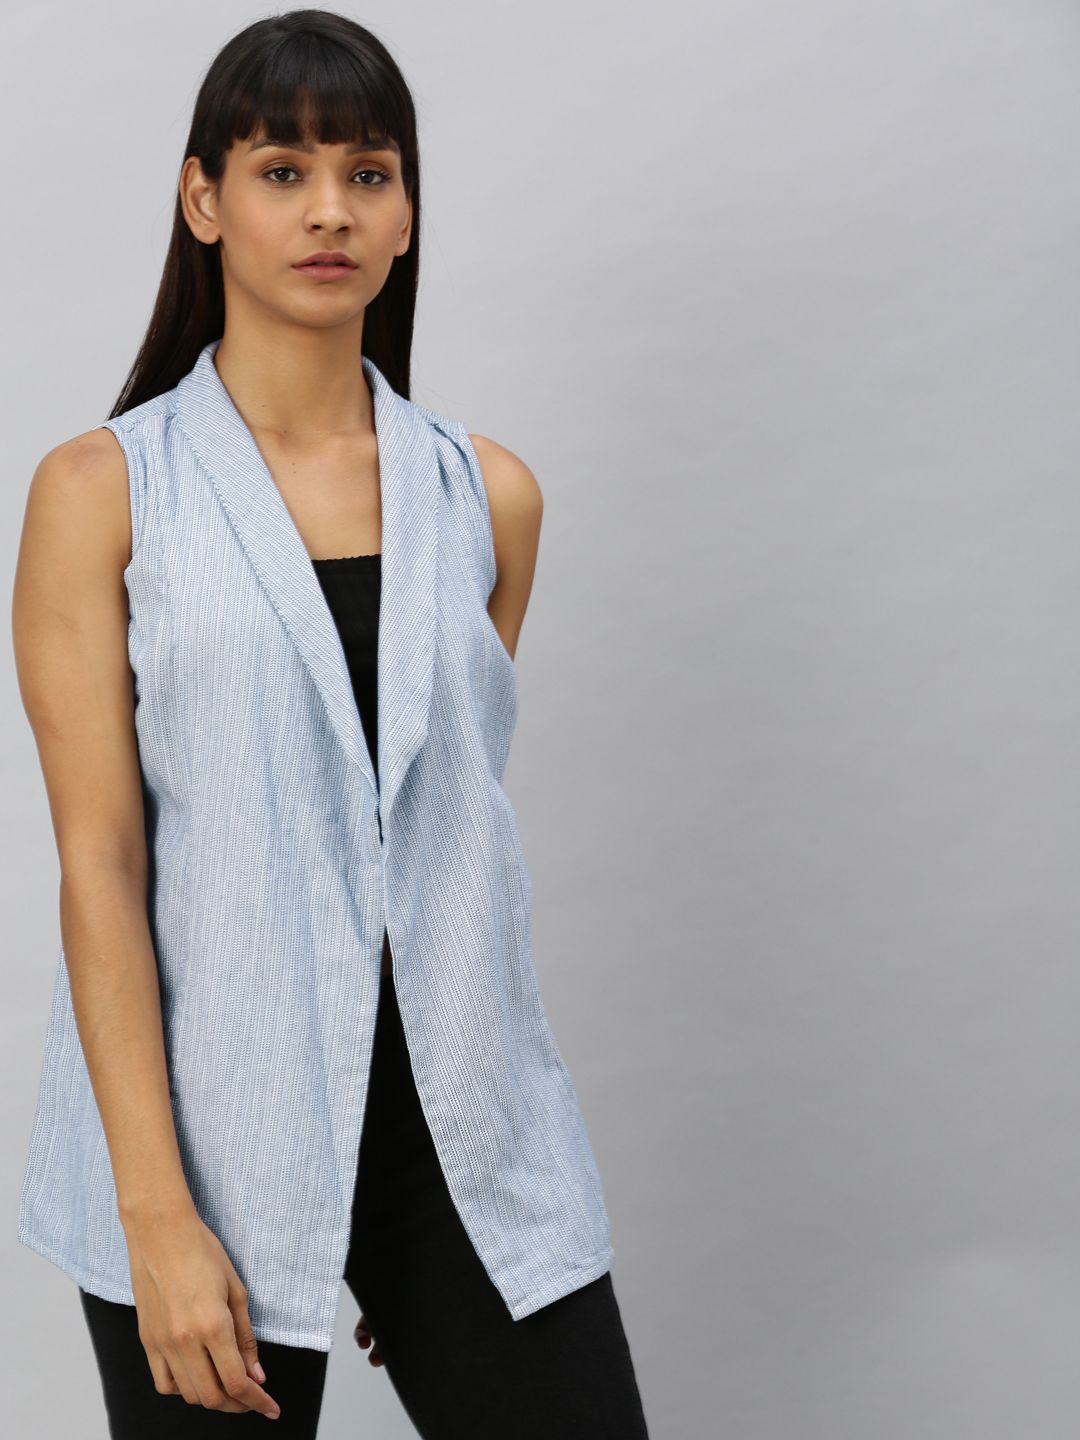 Vero Moda Women Blue & White Self-Striped Tailored Jacket Price in India